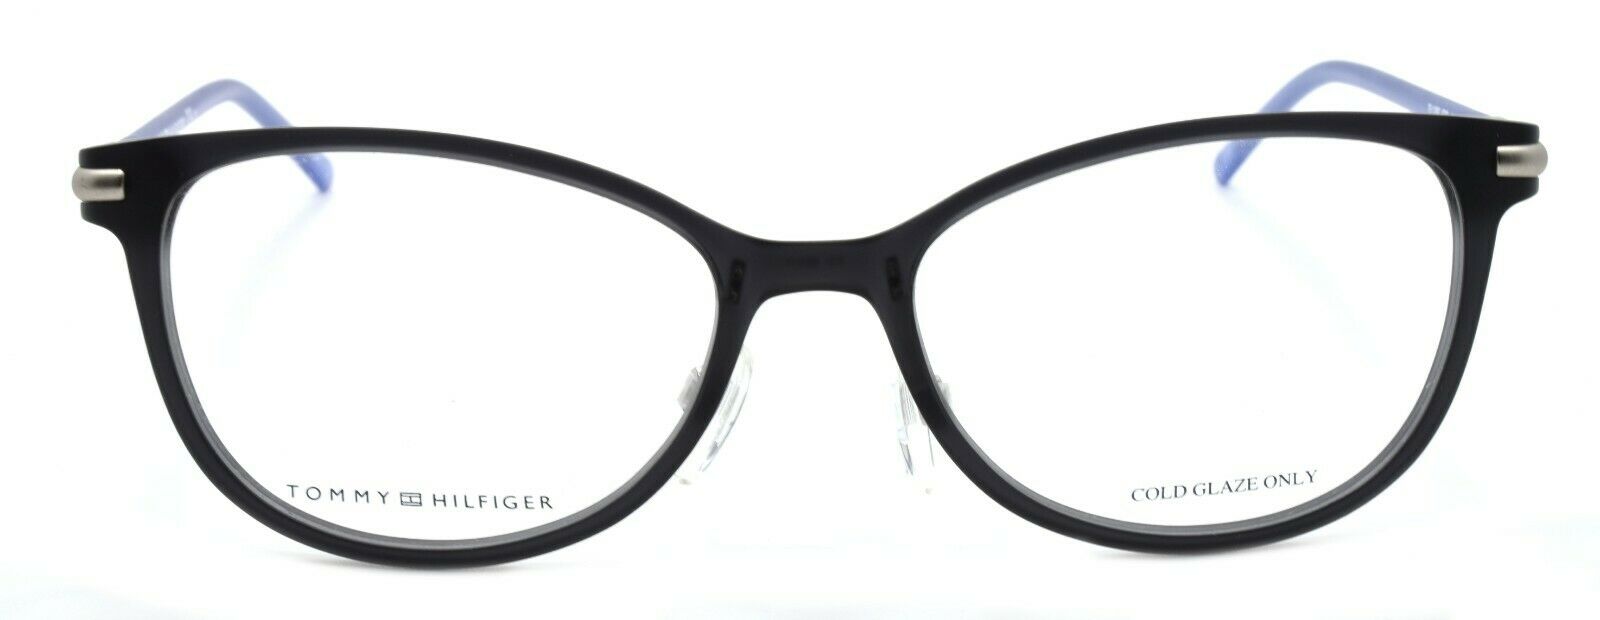 2-TOMMY HILFIGER TH 1398 R3B Women's Eyeglasses Frames 52-17-140 Gray / Blue +CASE-827886446322-IKSpecs